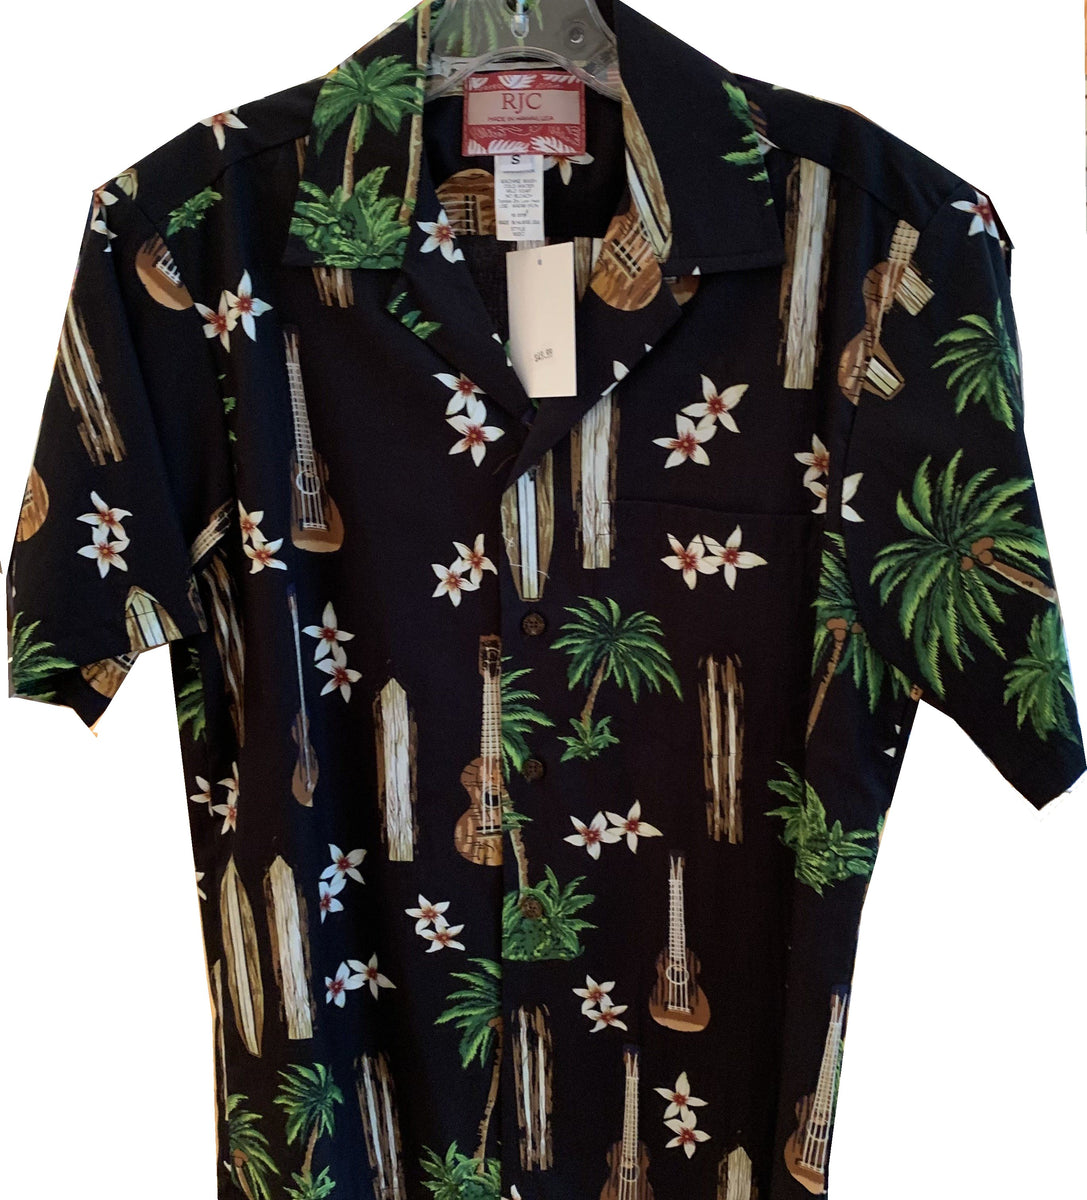 The Aloha Shirt Club - In Paia, Ukulele Clothing Company launched